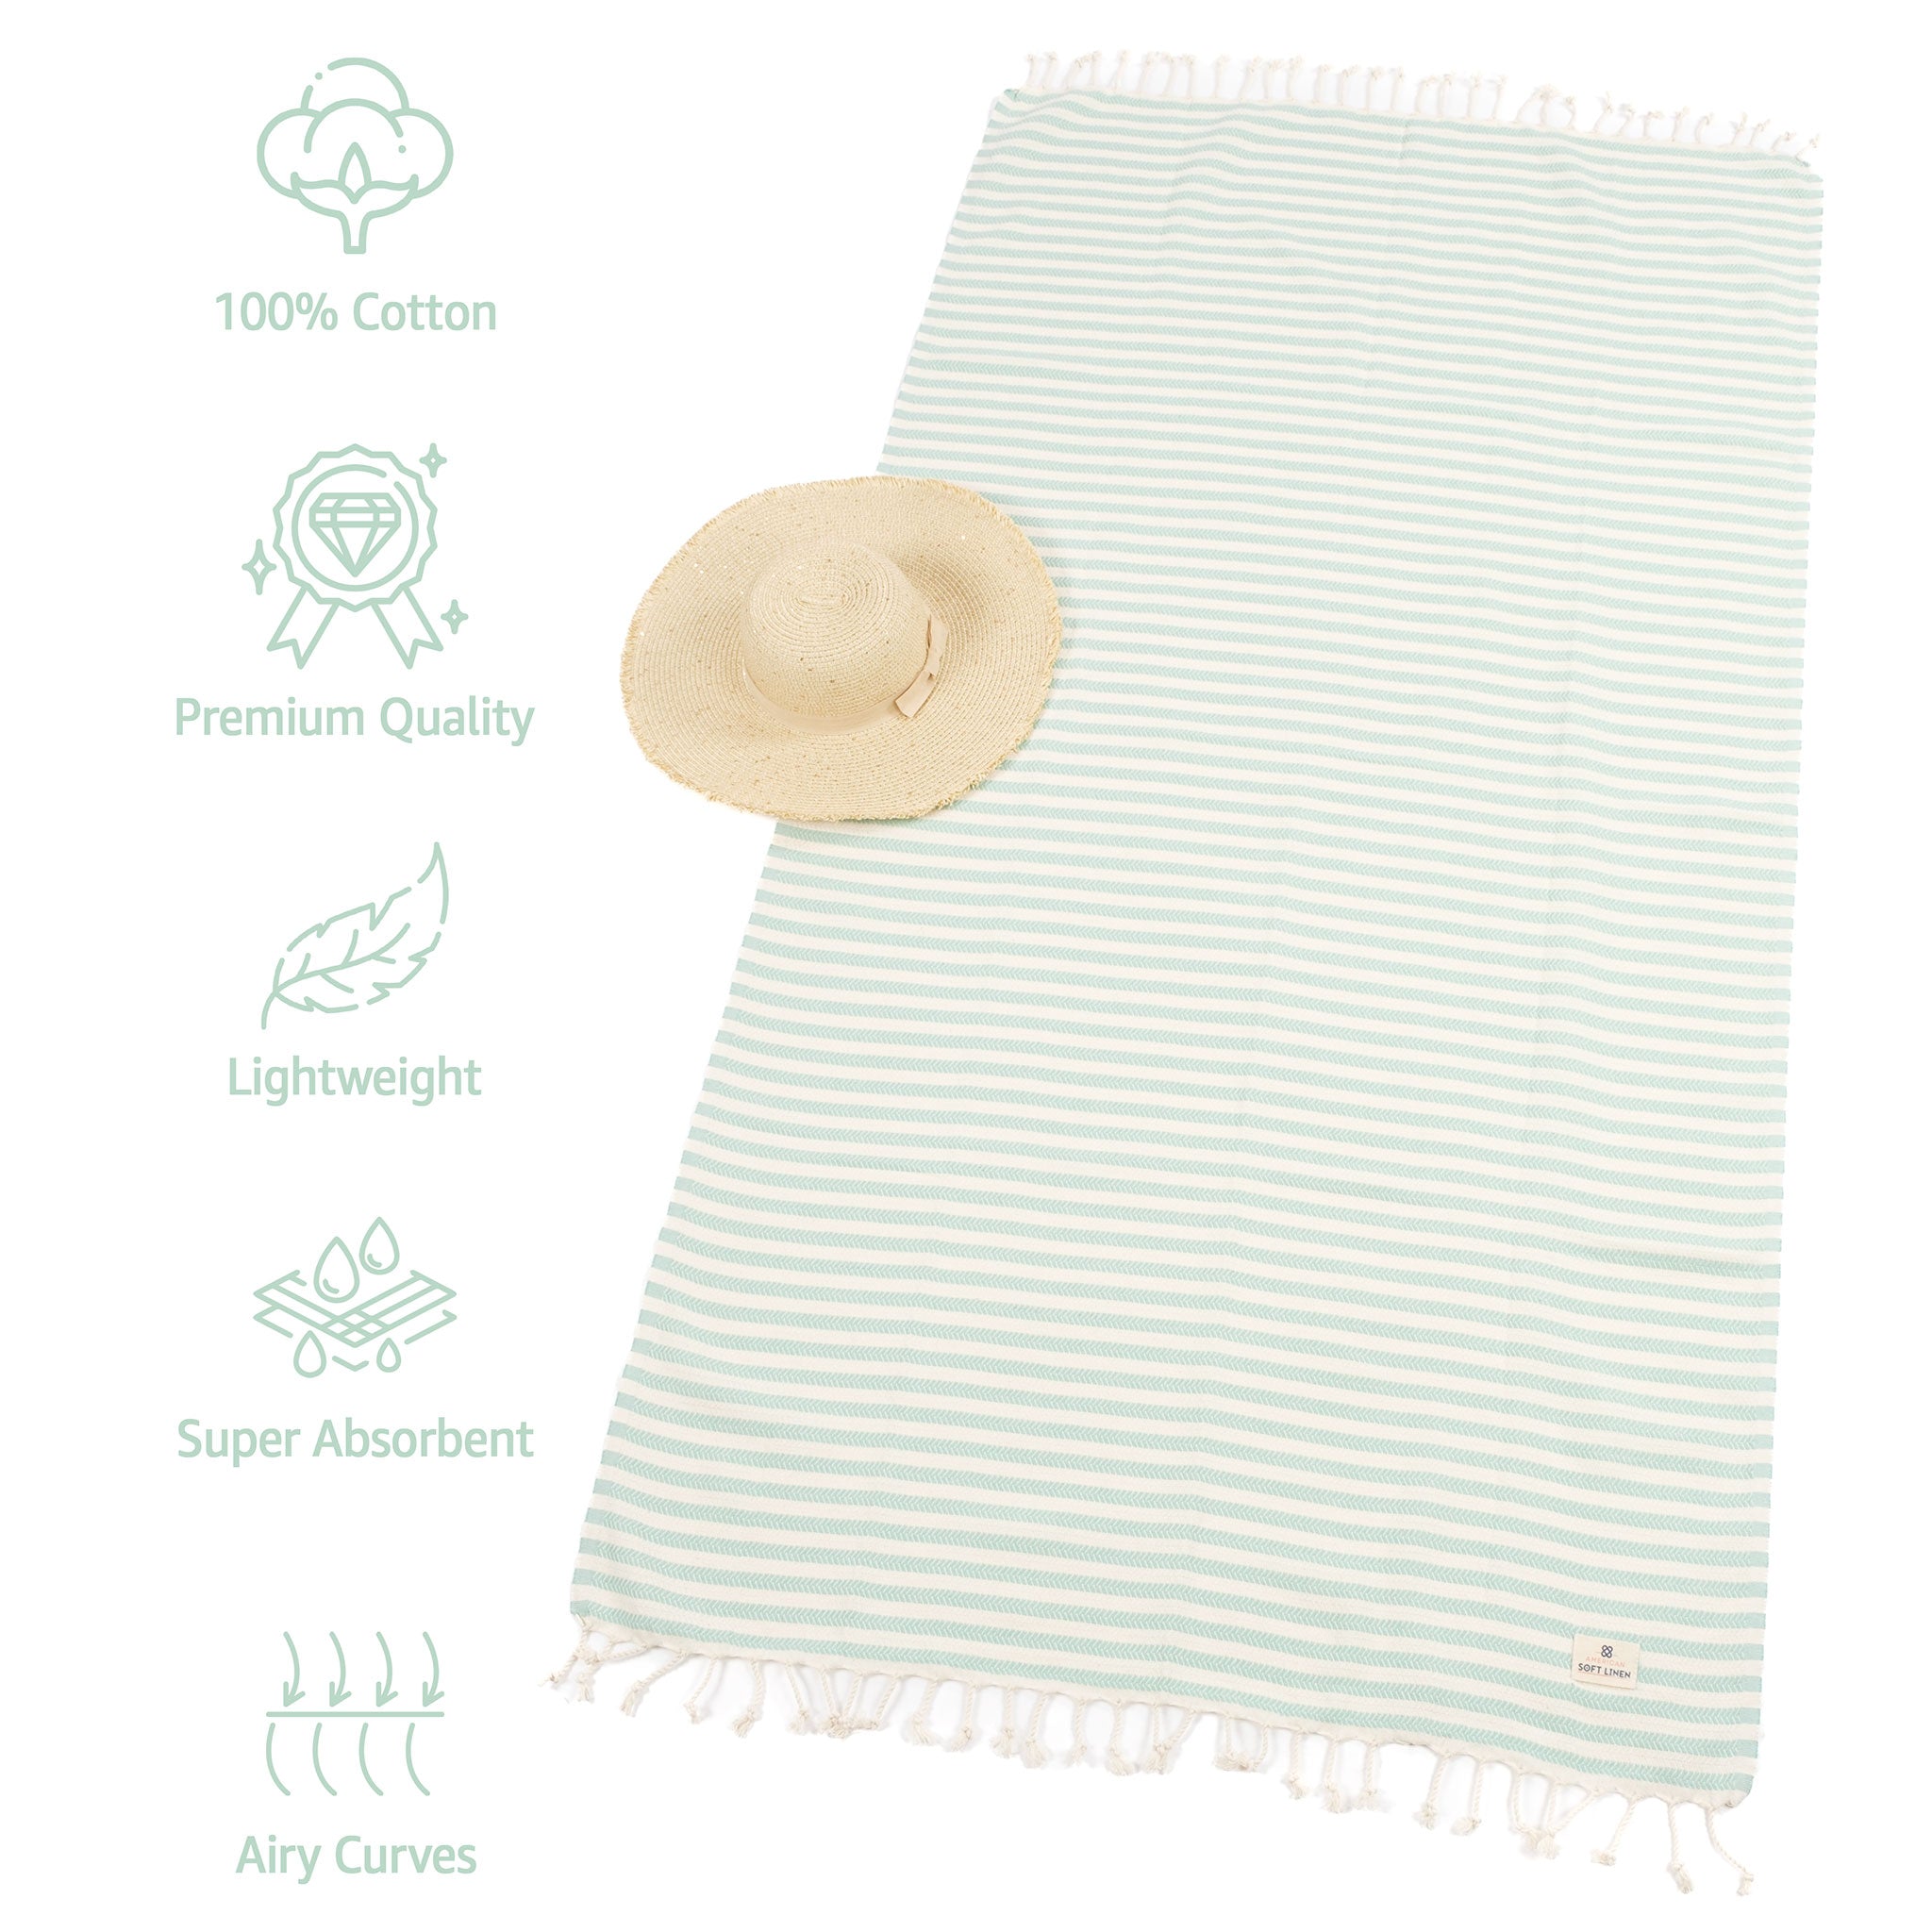 American Soft Linen - 100% Cotton Turkish Peshtemal Towels 40x70 Inches - Sage - 3